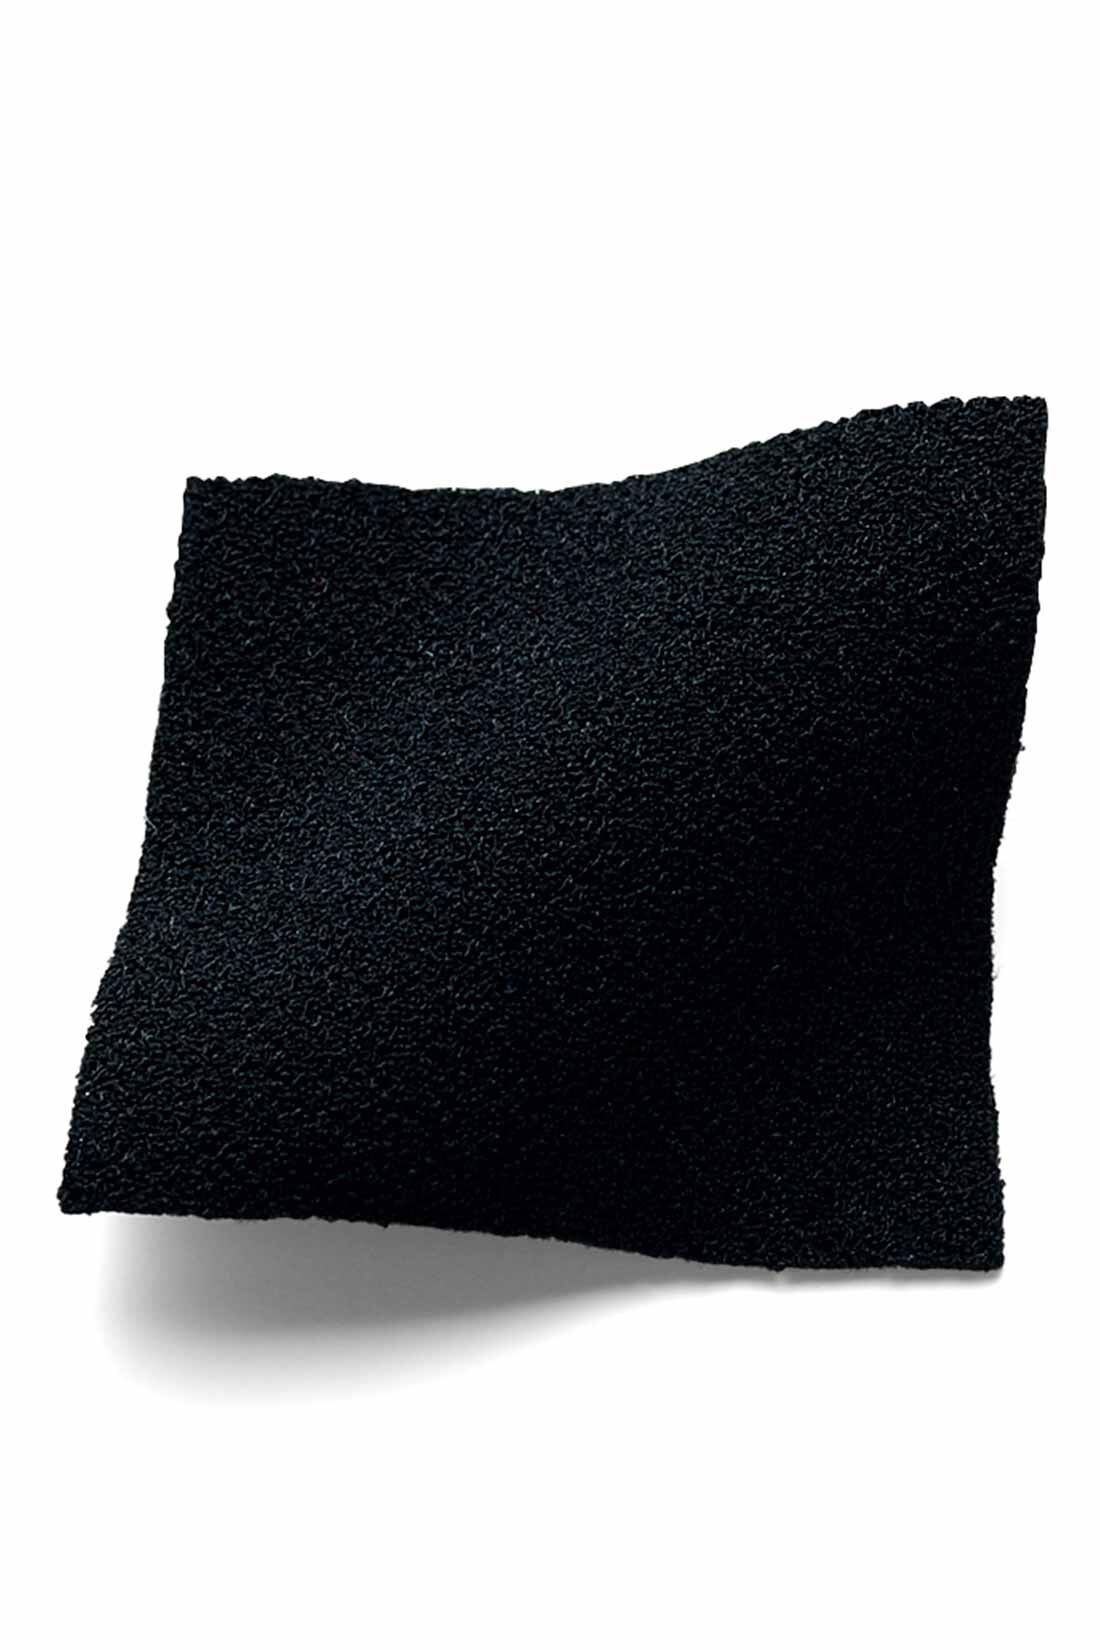 IEDIT|IEDIT[イディット]　イージーな着心地で上品スタイルがかなうプリーツ切り替えワンピース〈ブラック〉|布はく見えするほどよい厚みのジョーゼット素材。